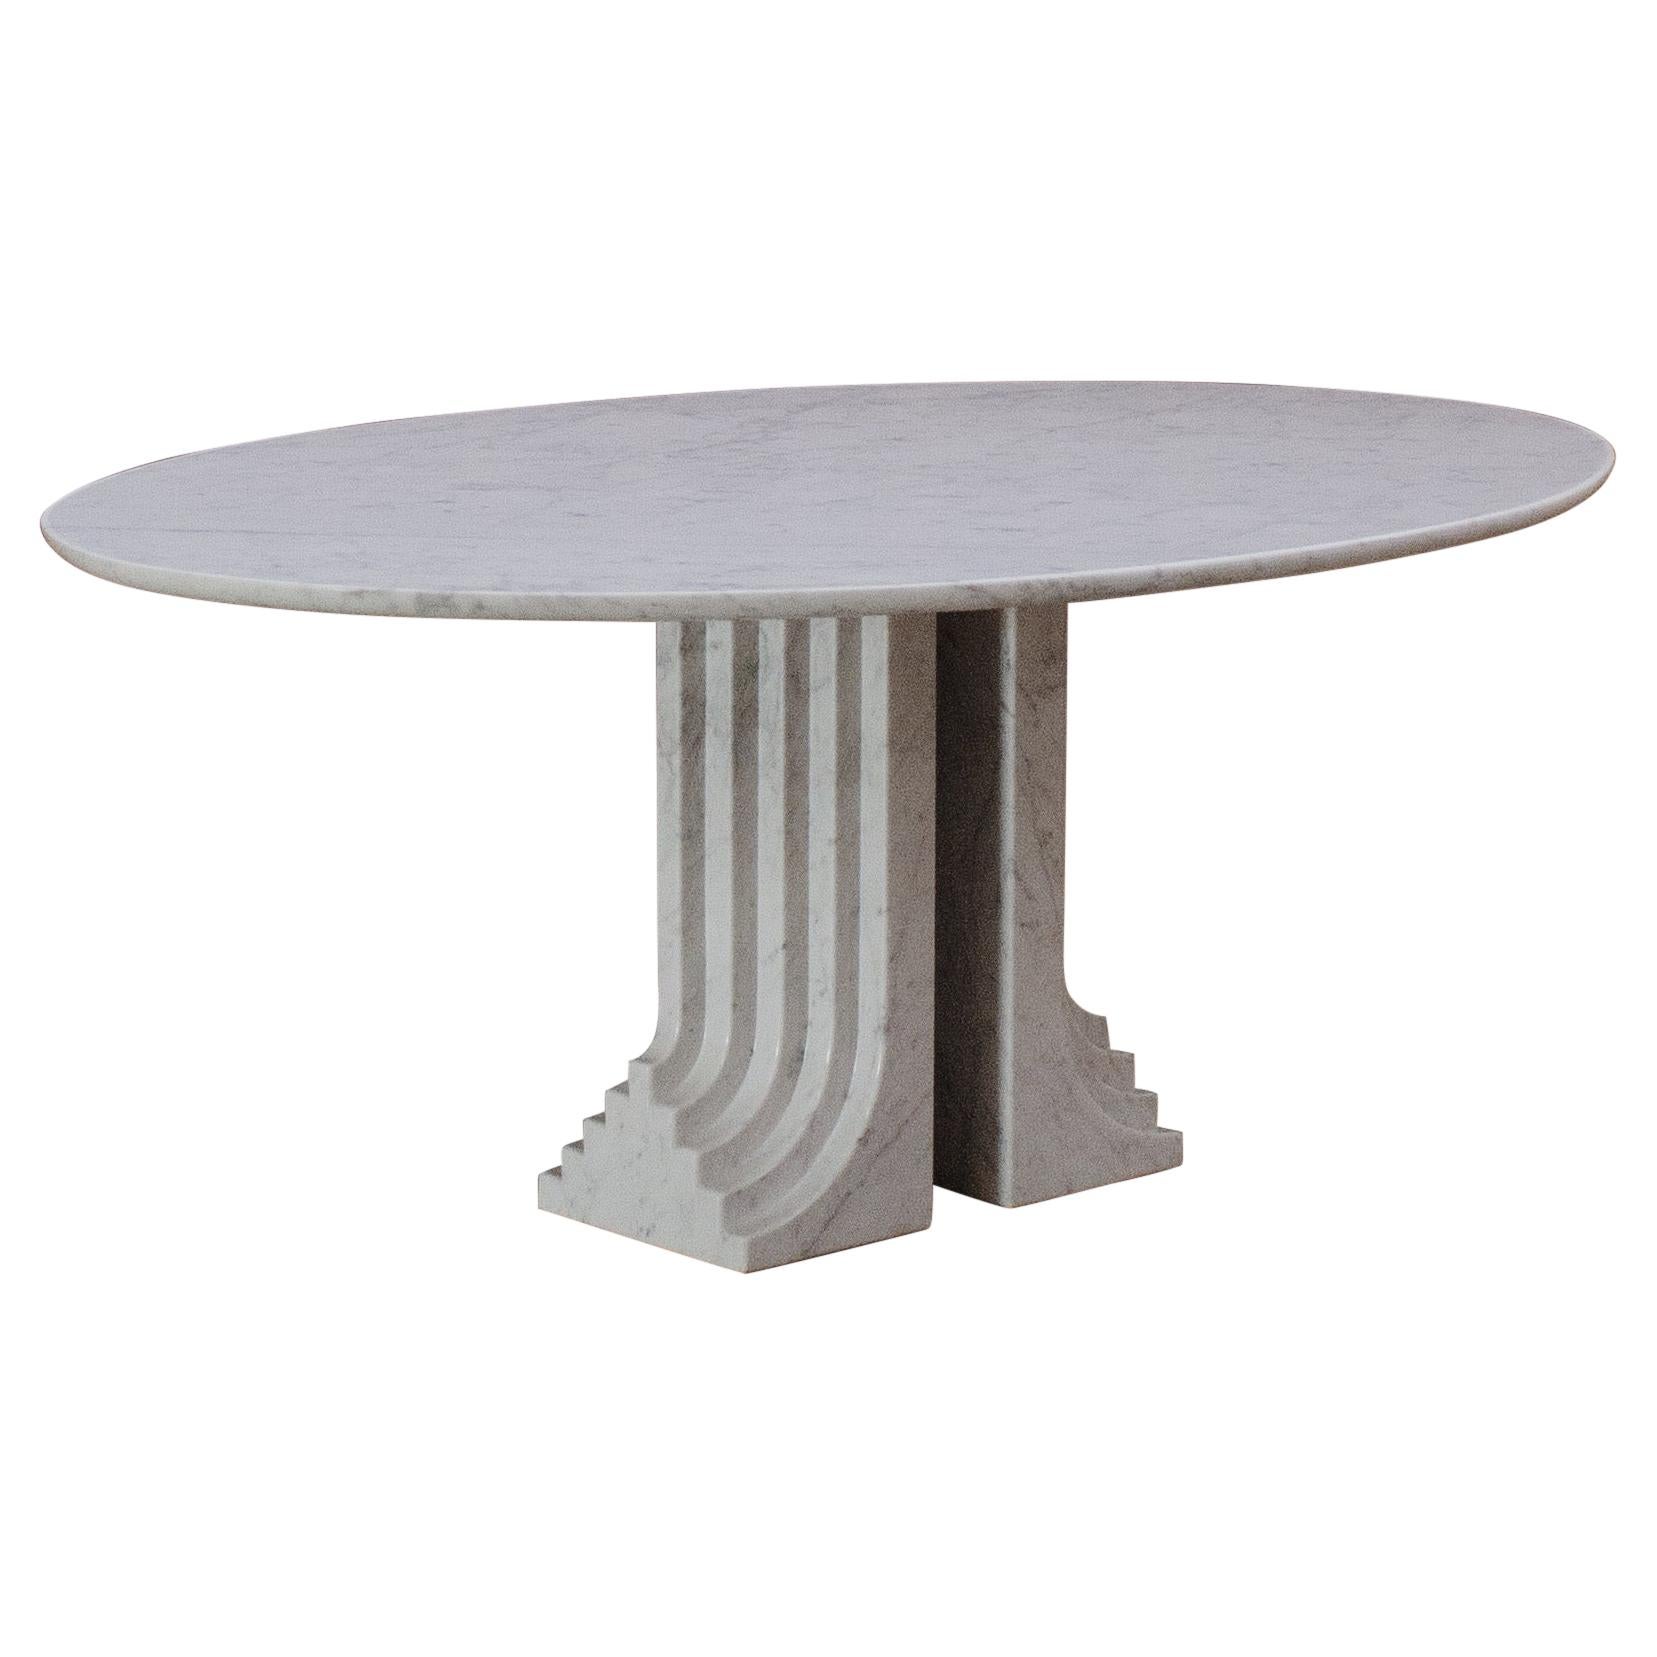 Carlo Scarpa "Samo" Oval Table for Simon Gavina in White Carrara Marble, 1971